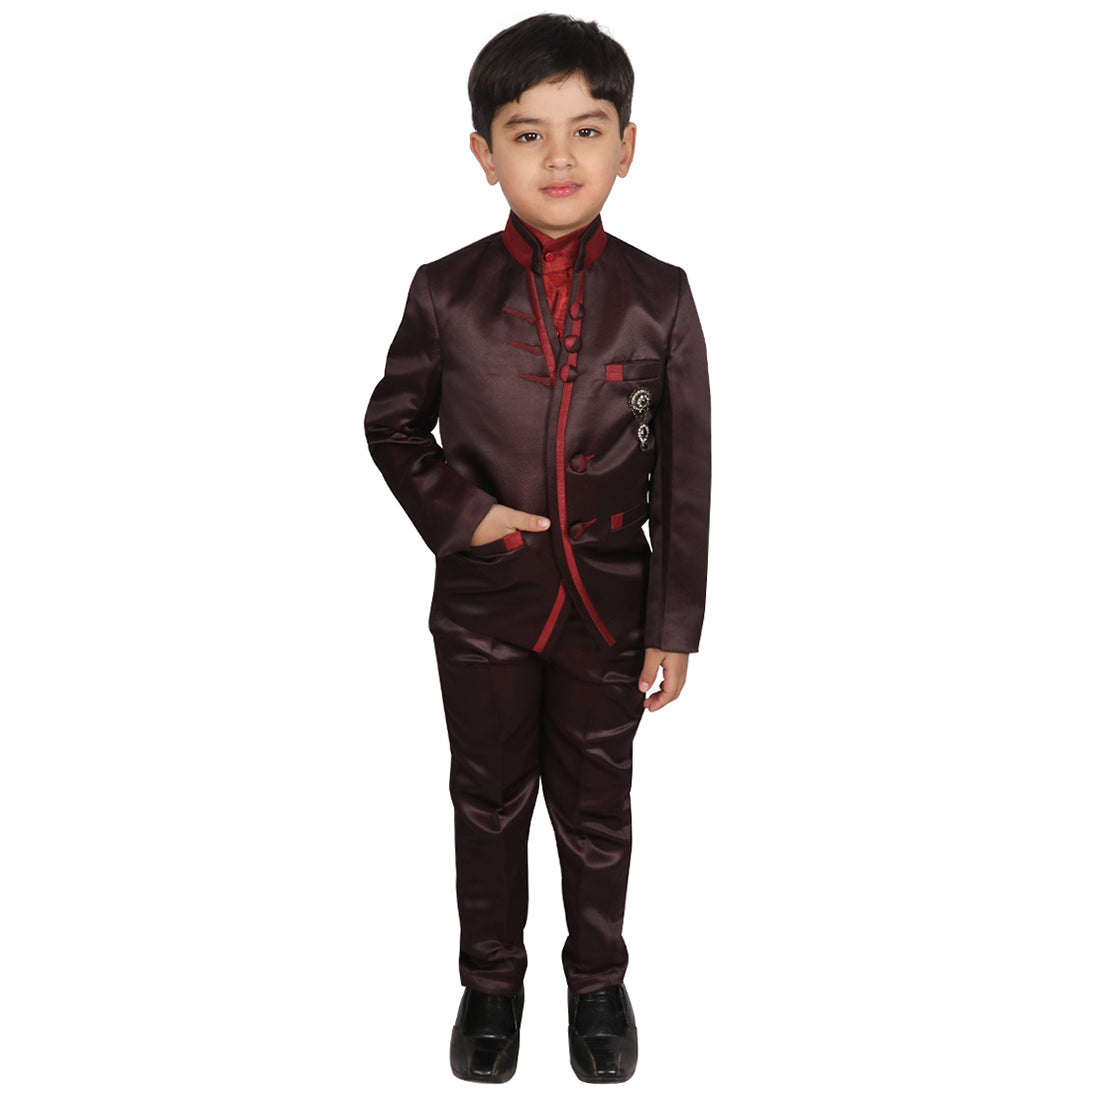 SG YUVRAJ Suits & Sets For Boys (CP-1027)